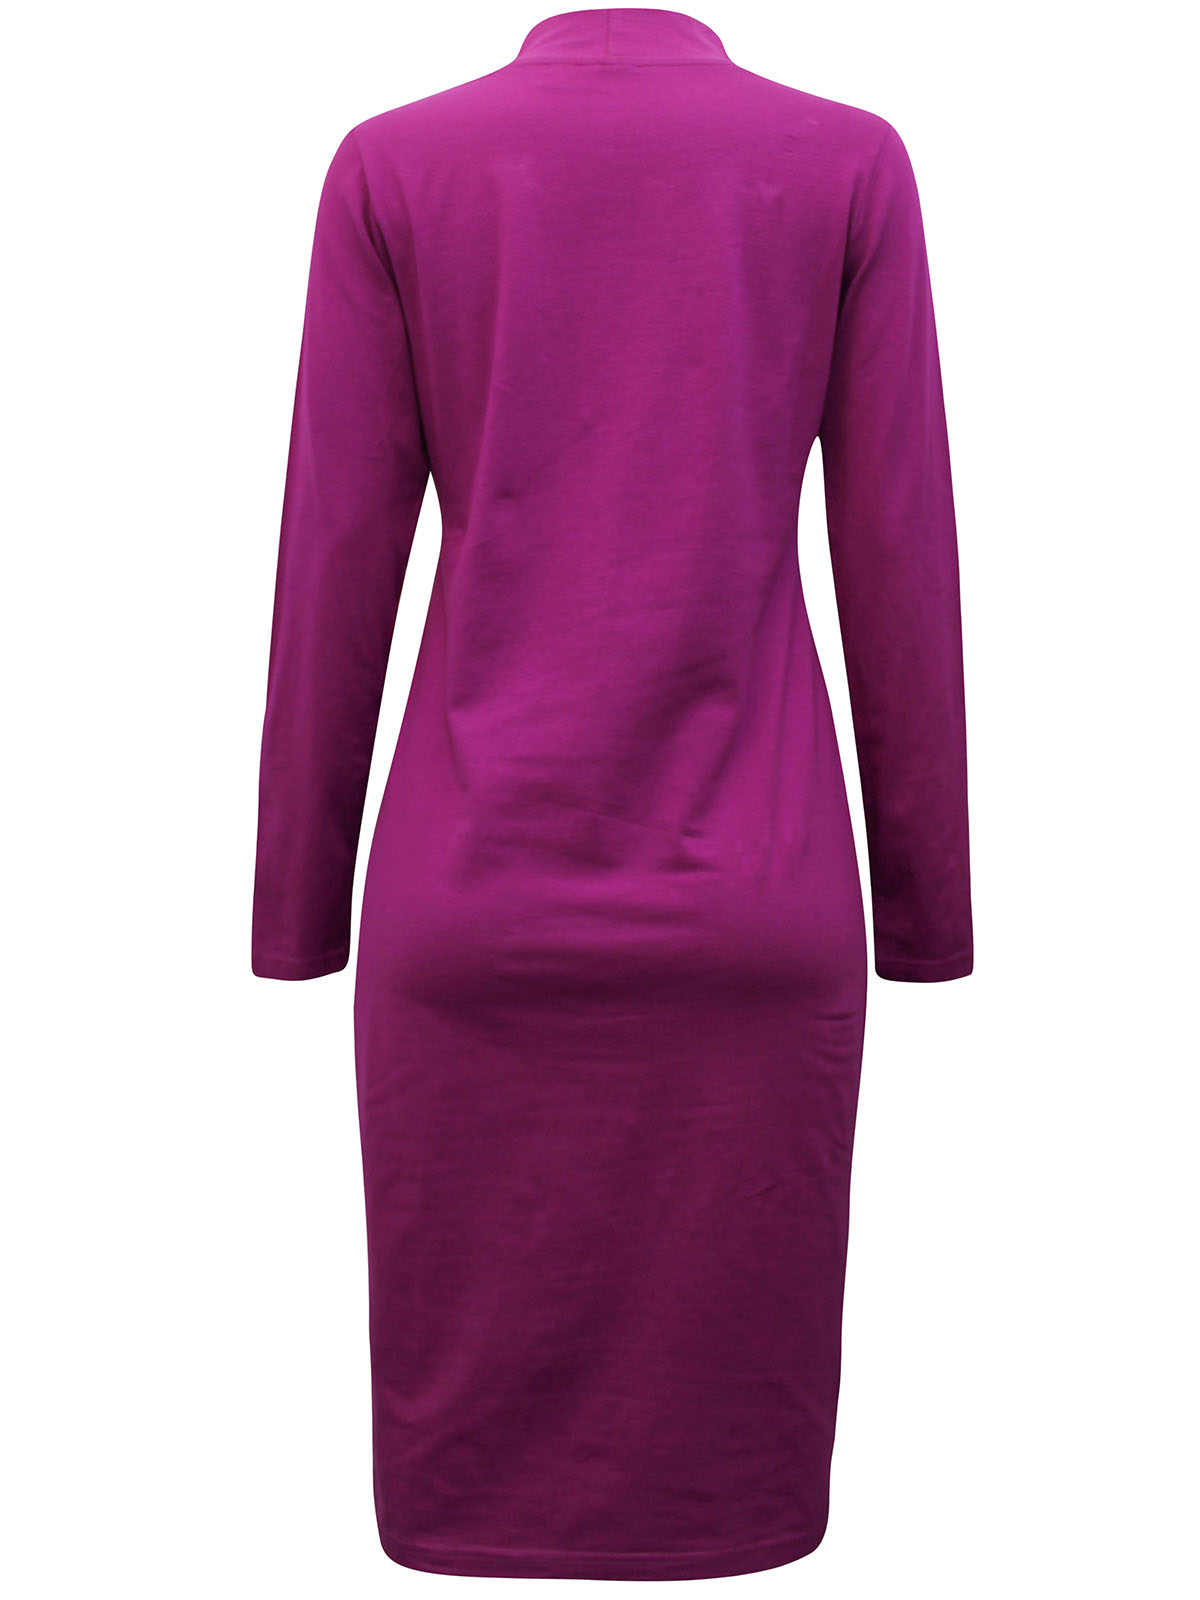 BPC - - MAGENTA High Neck Jersey Midi Dress - Size 10/12 to 26/28 (EU ...